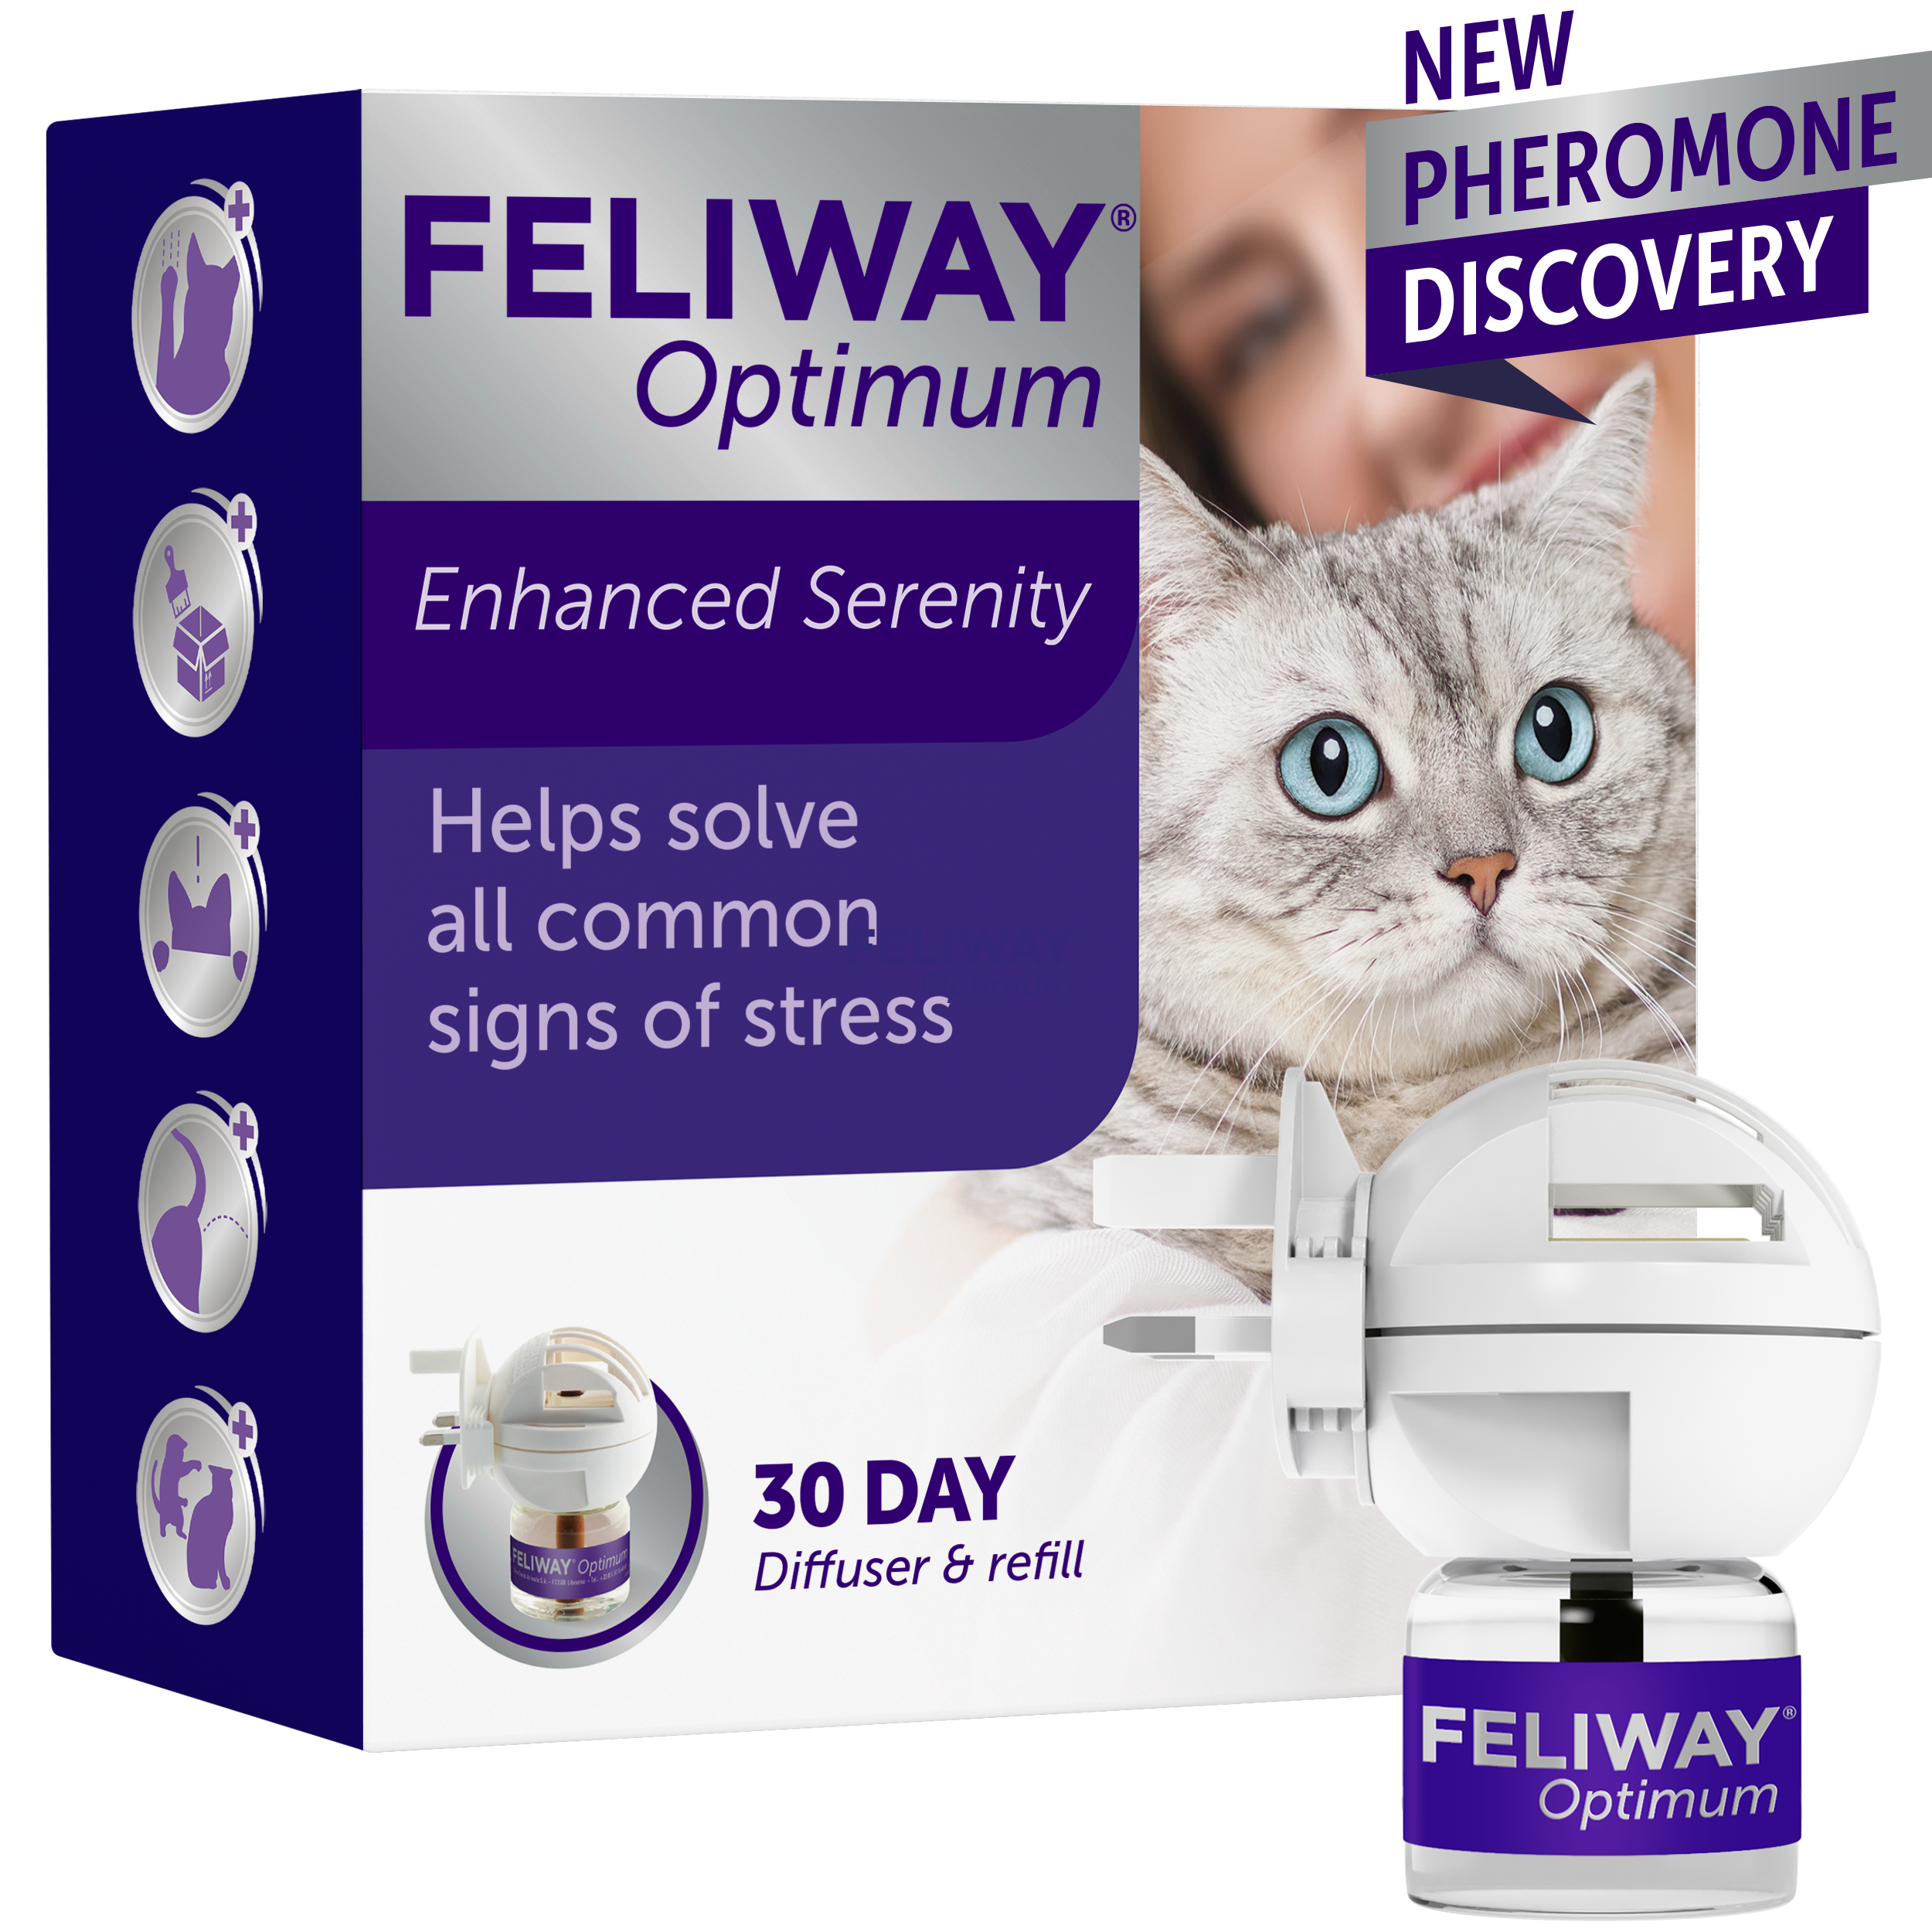  FELIWAY Classic Cat Calming Pheromone, 30 Day Refill - 1 Pack  : Pet Supplies